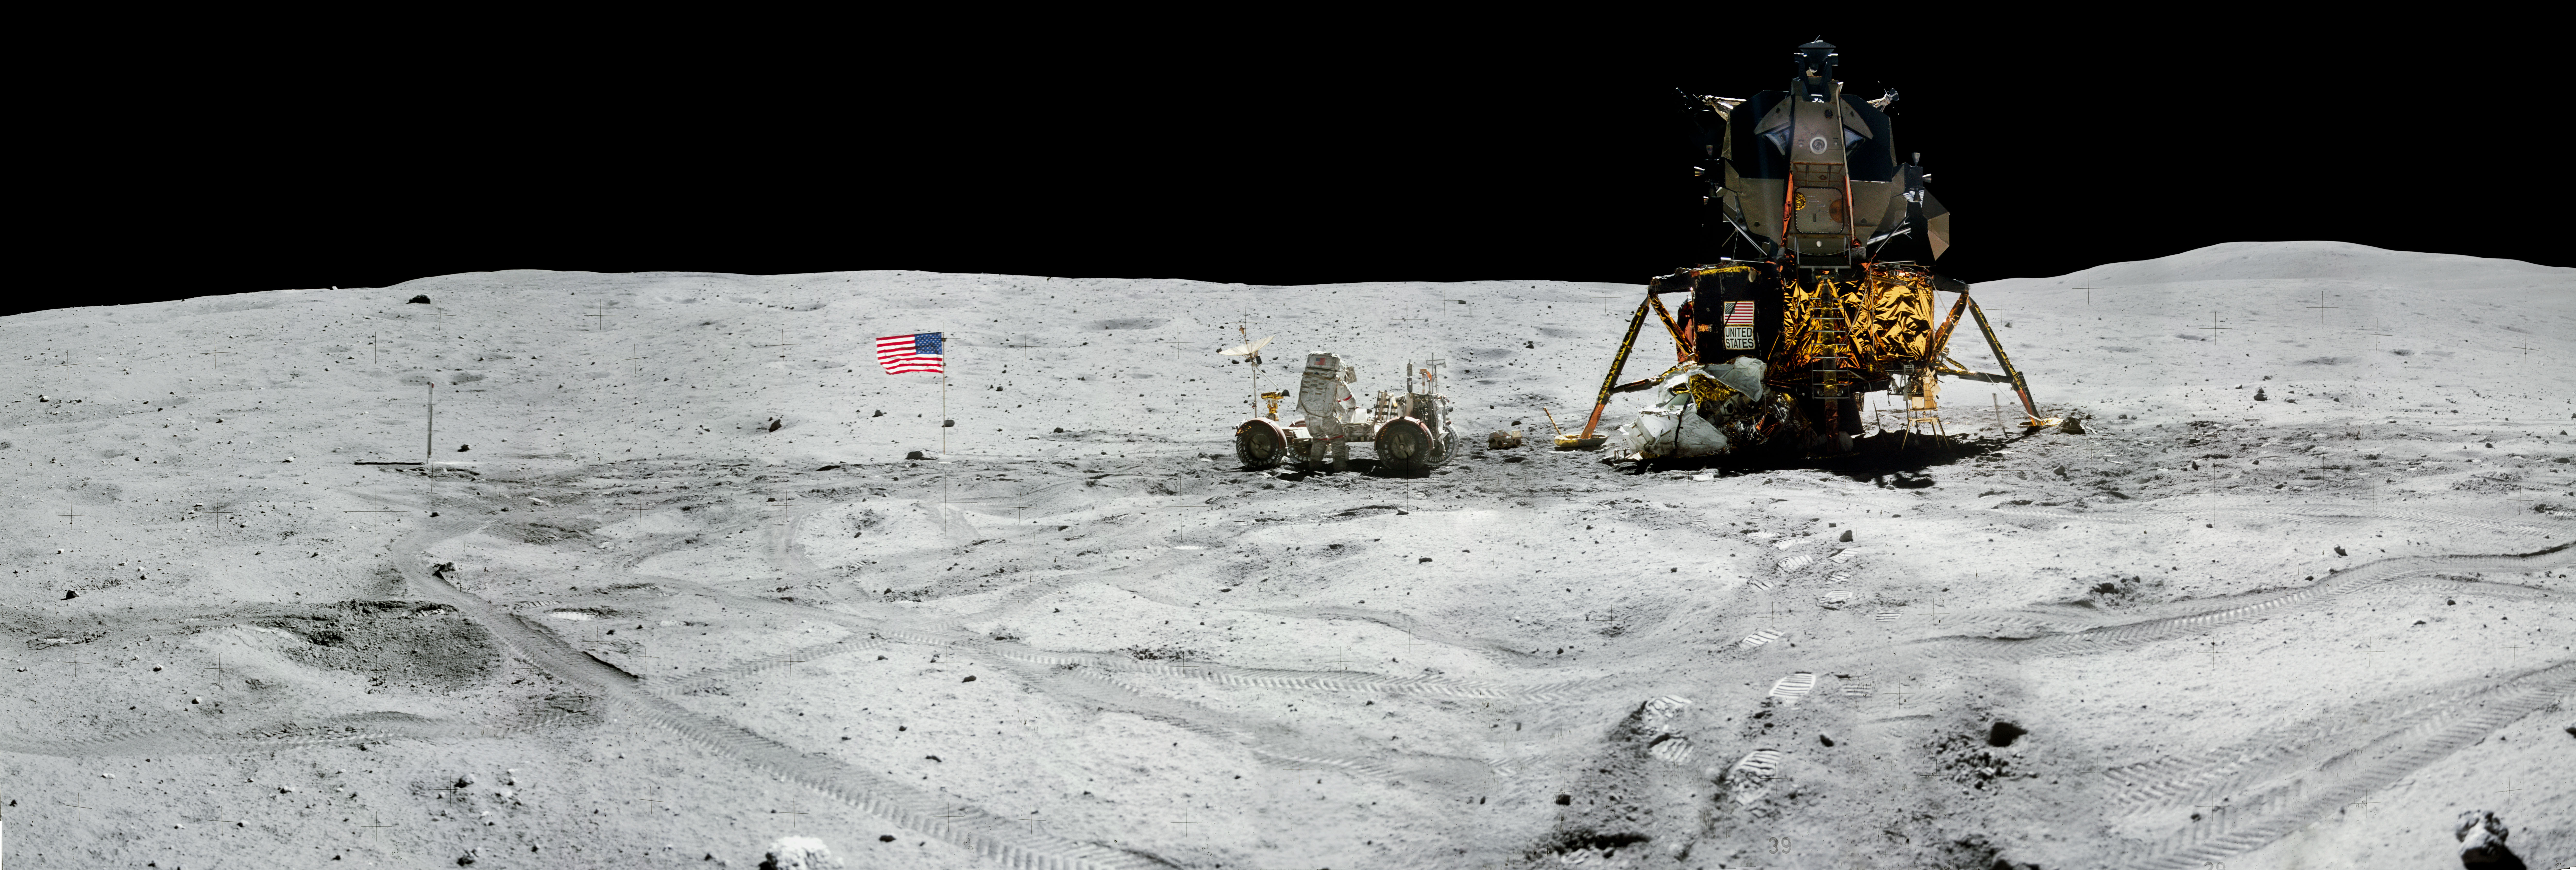 Корабль на поверхности луны. Миссия Аполлон 11. Аполлон-11 фото. Аполлон 16 на Луне 1972. Апполо 11 на Луне.